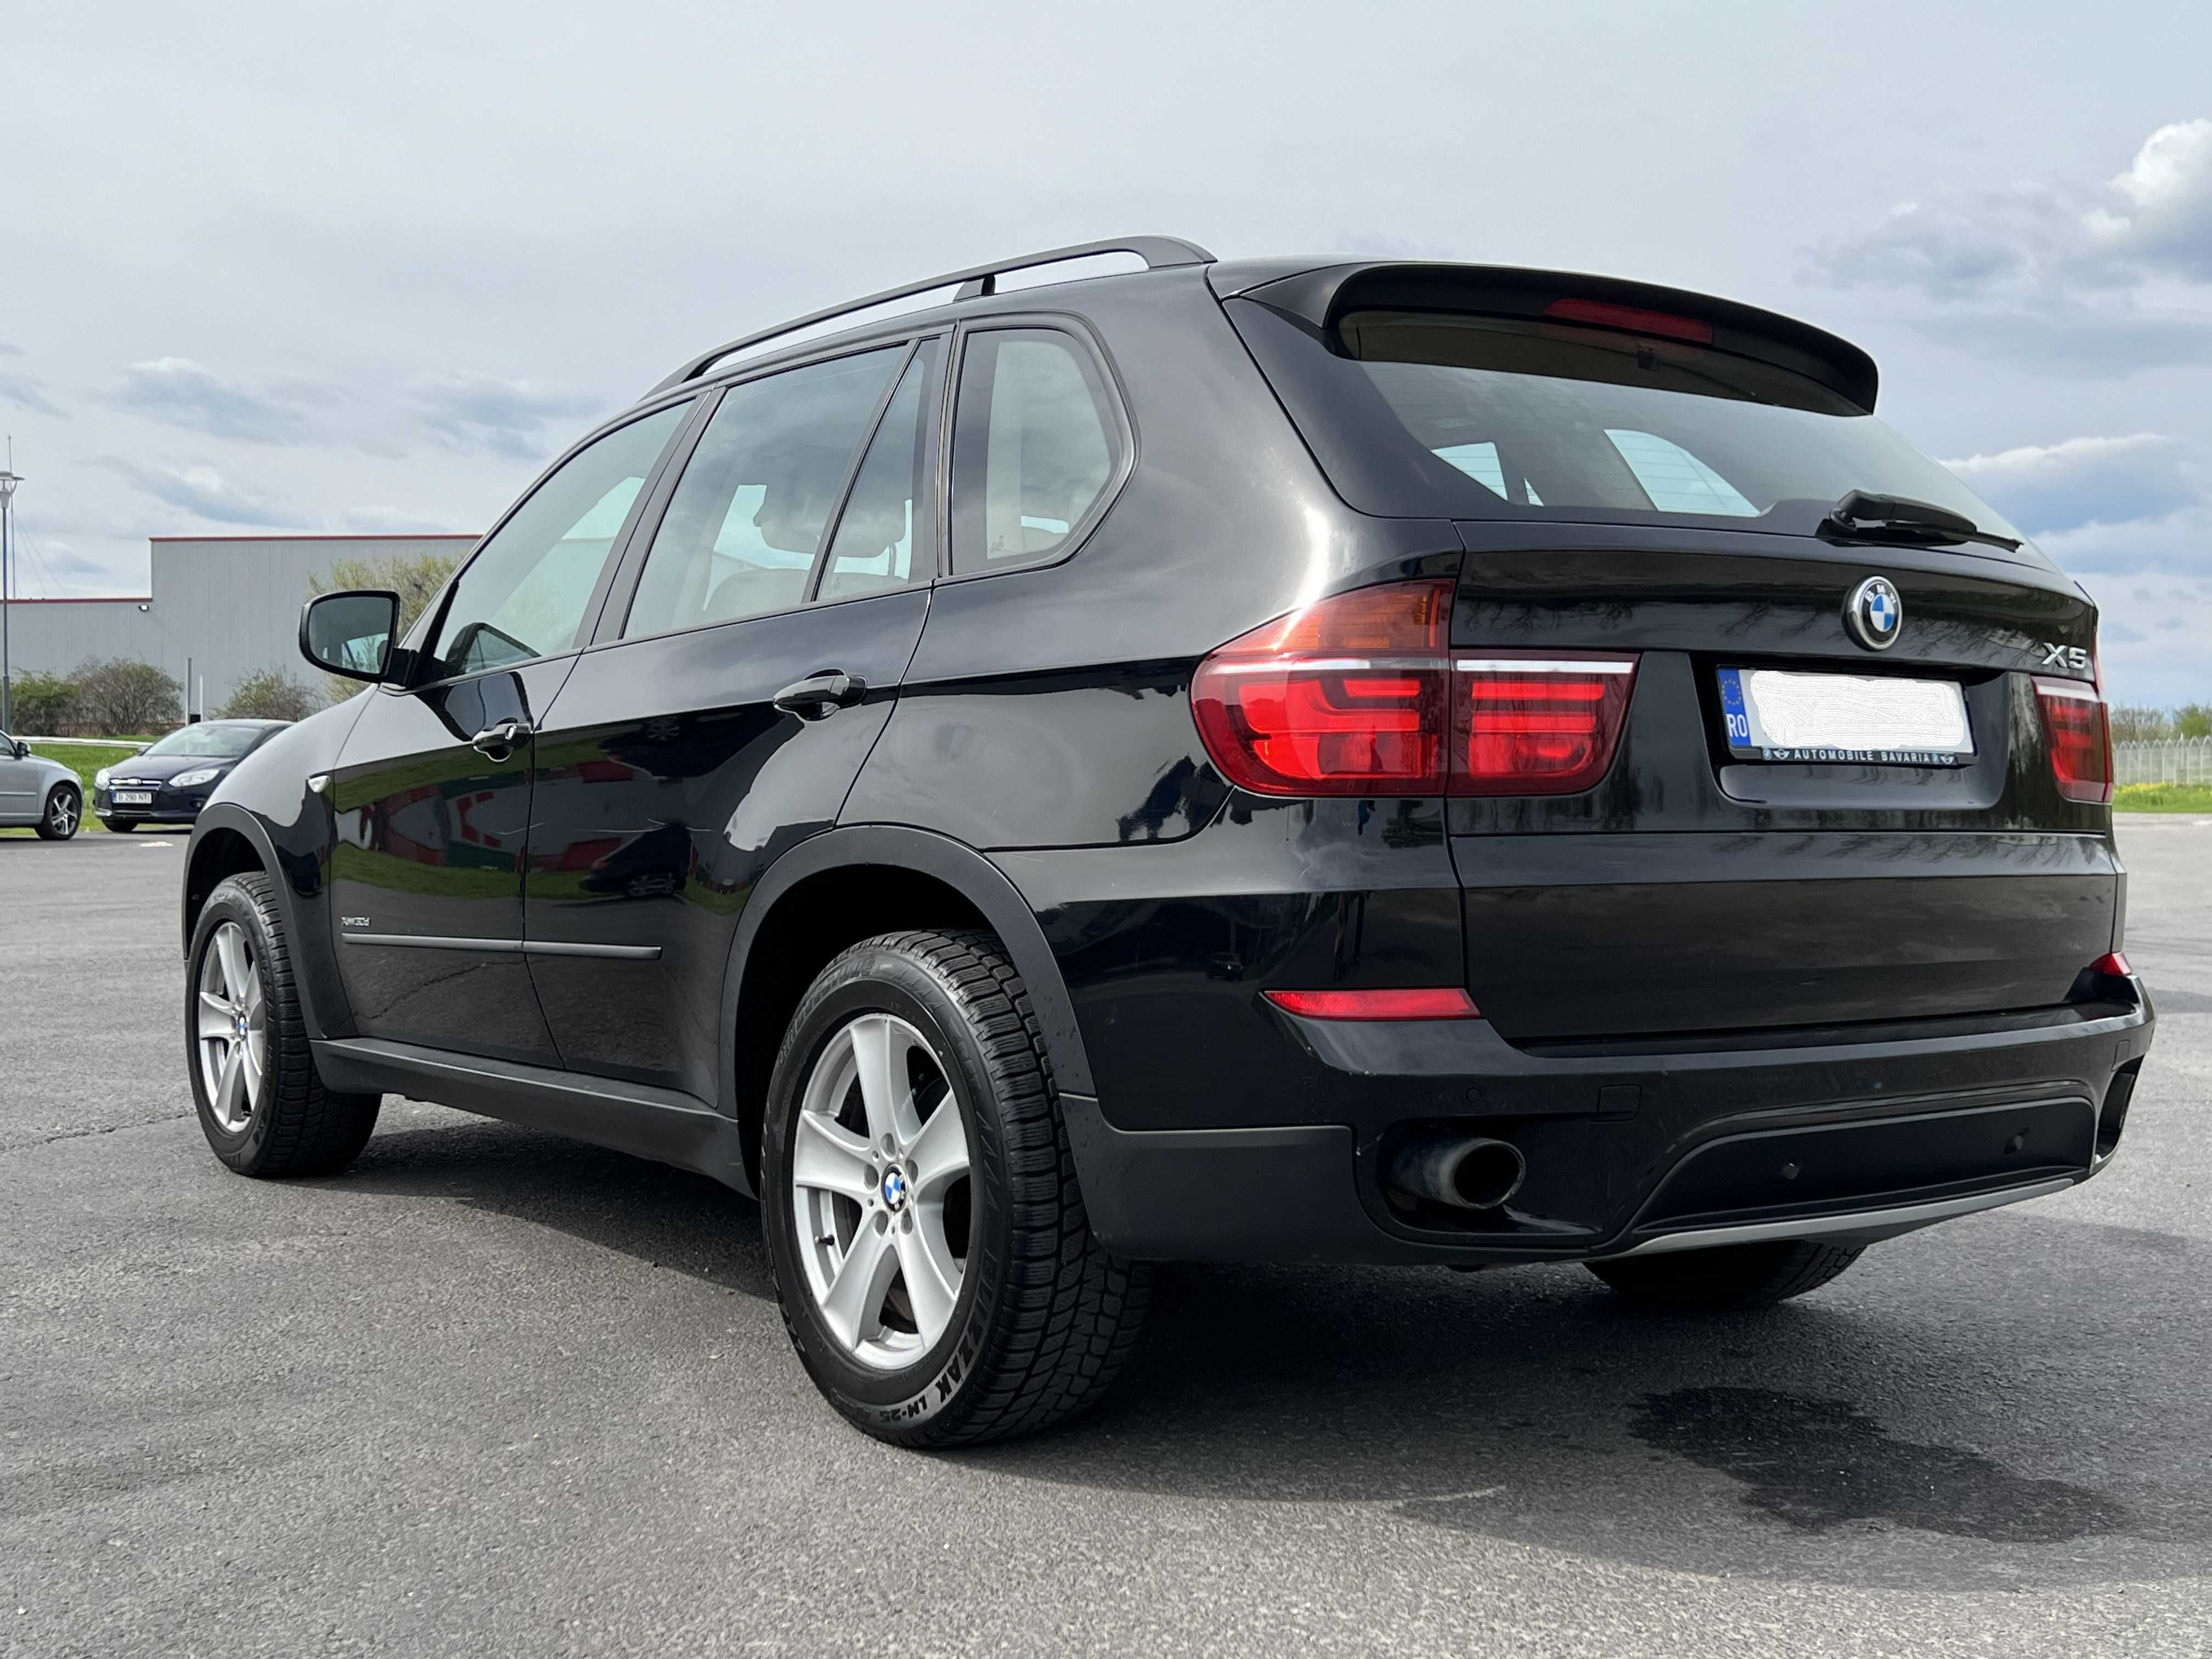 BMW X5 xDrive30d - unic proprietar